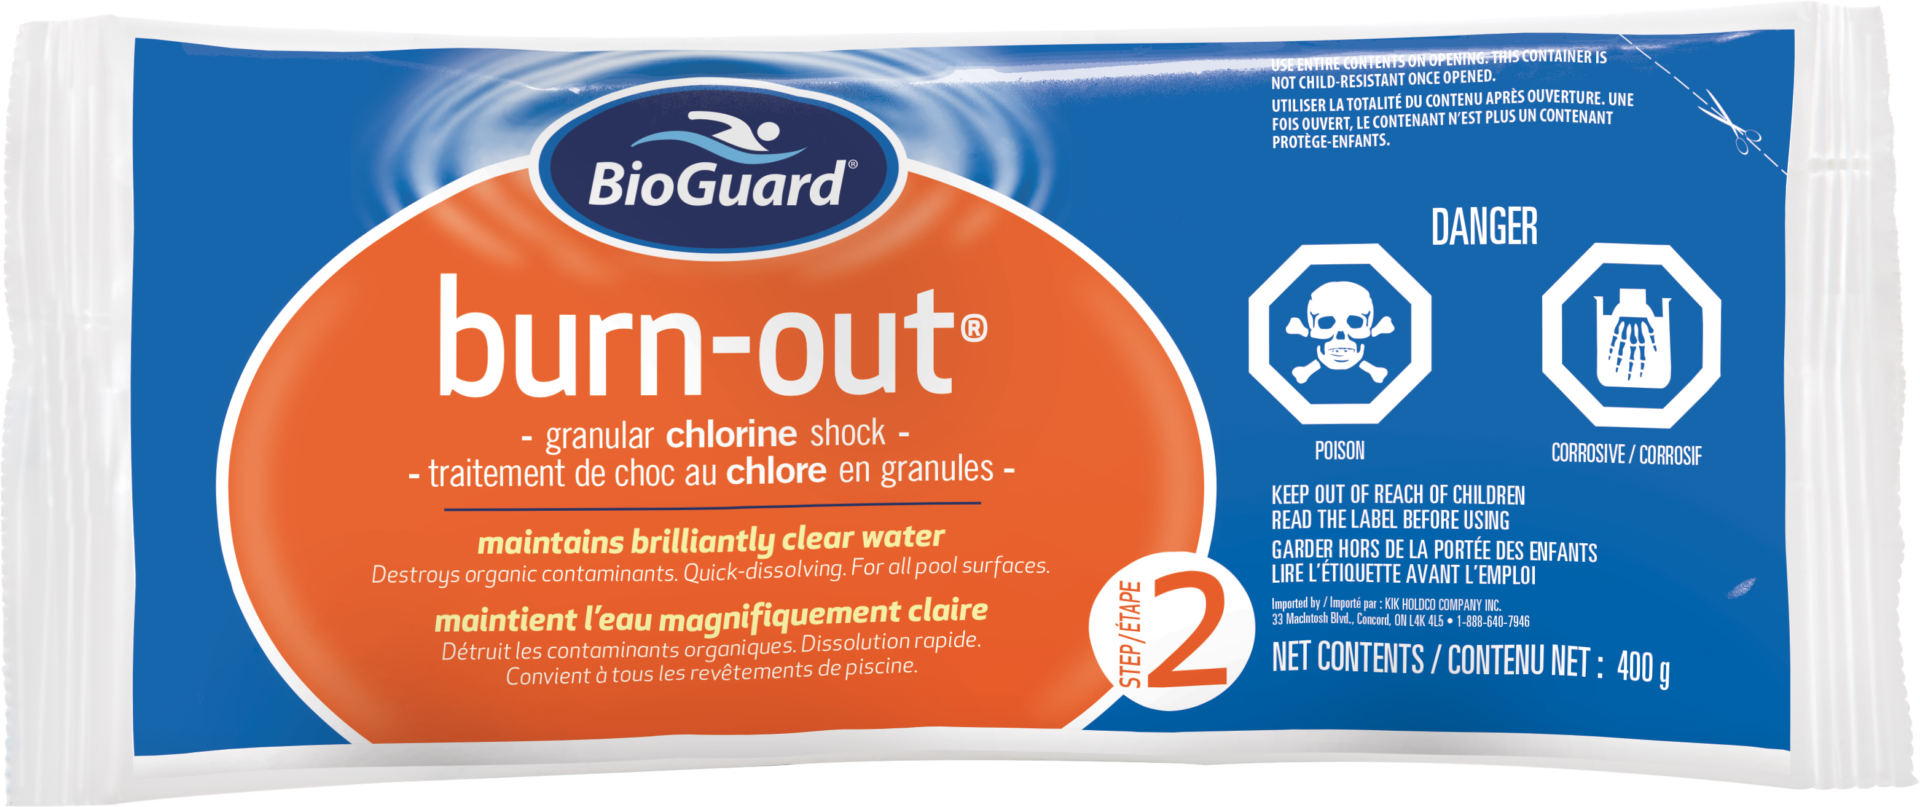 BioGuard Burn Out 400g - BURN OUT 400g bag